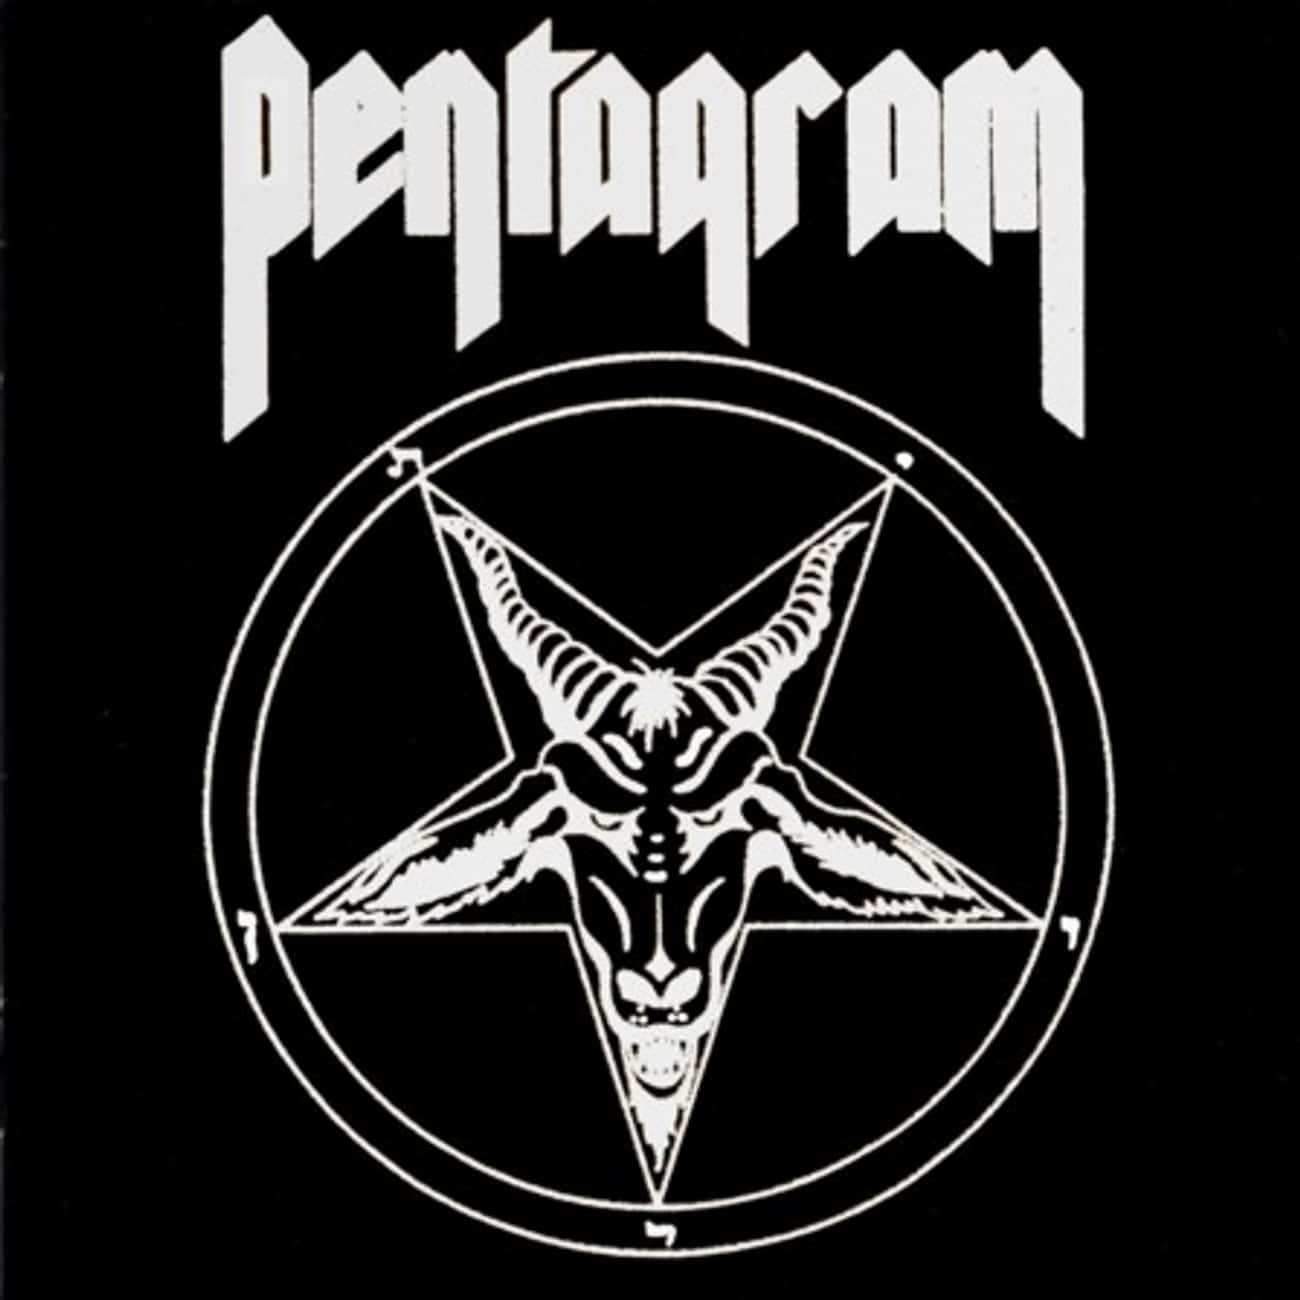 The Best Pentagram Albums Ranked By Fans